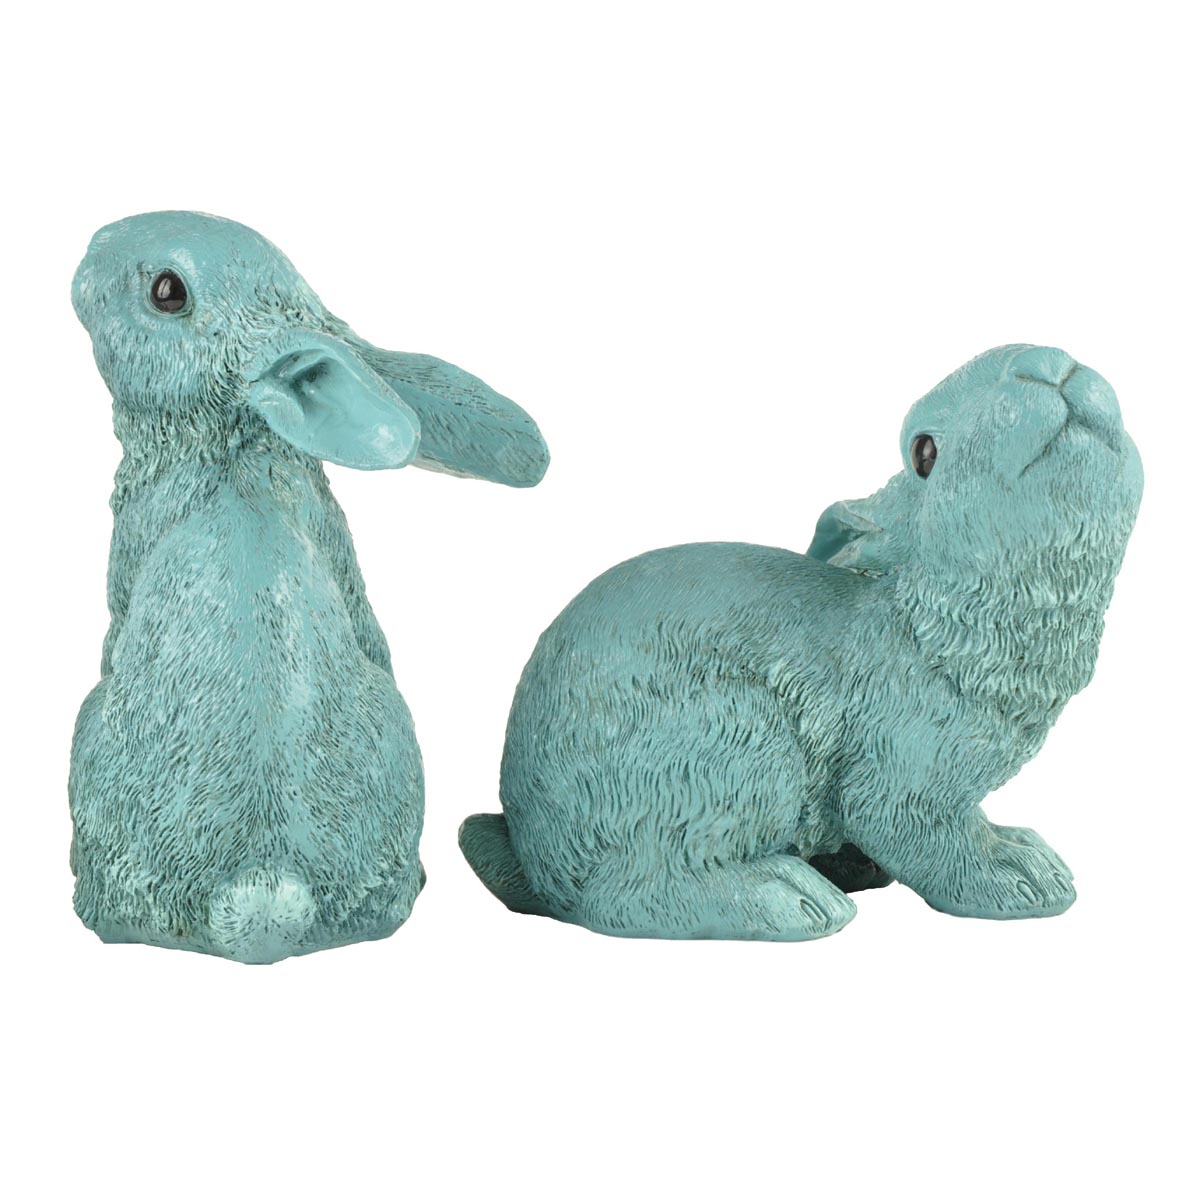 free sample vintage easter bunny figurines polyresin micro landscape-1